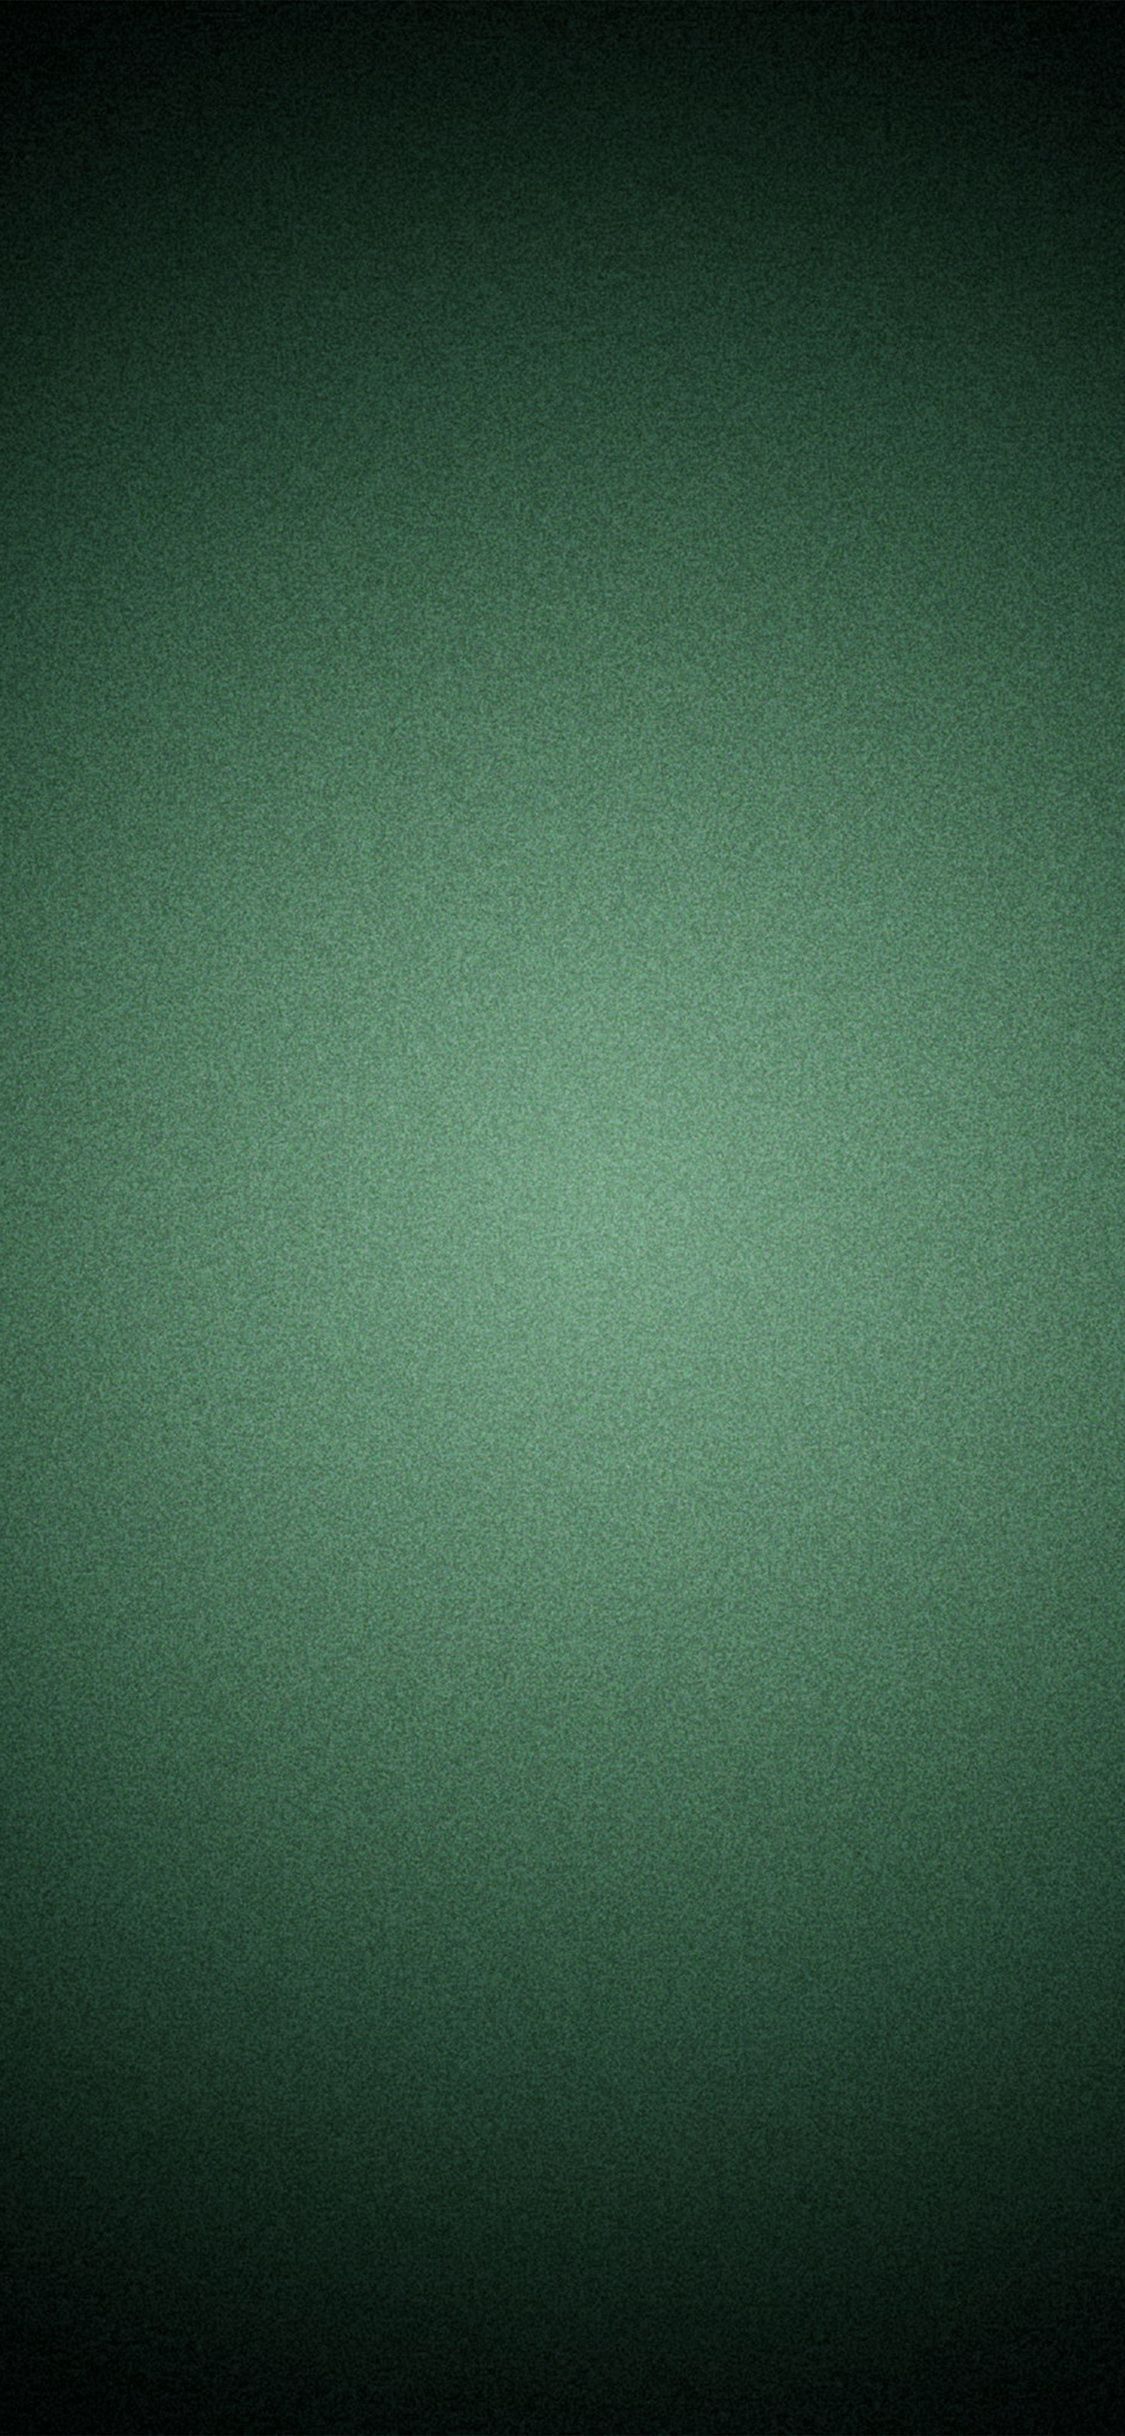 iPhoneX wallpaper: circle vignette dark green pattern. Dark